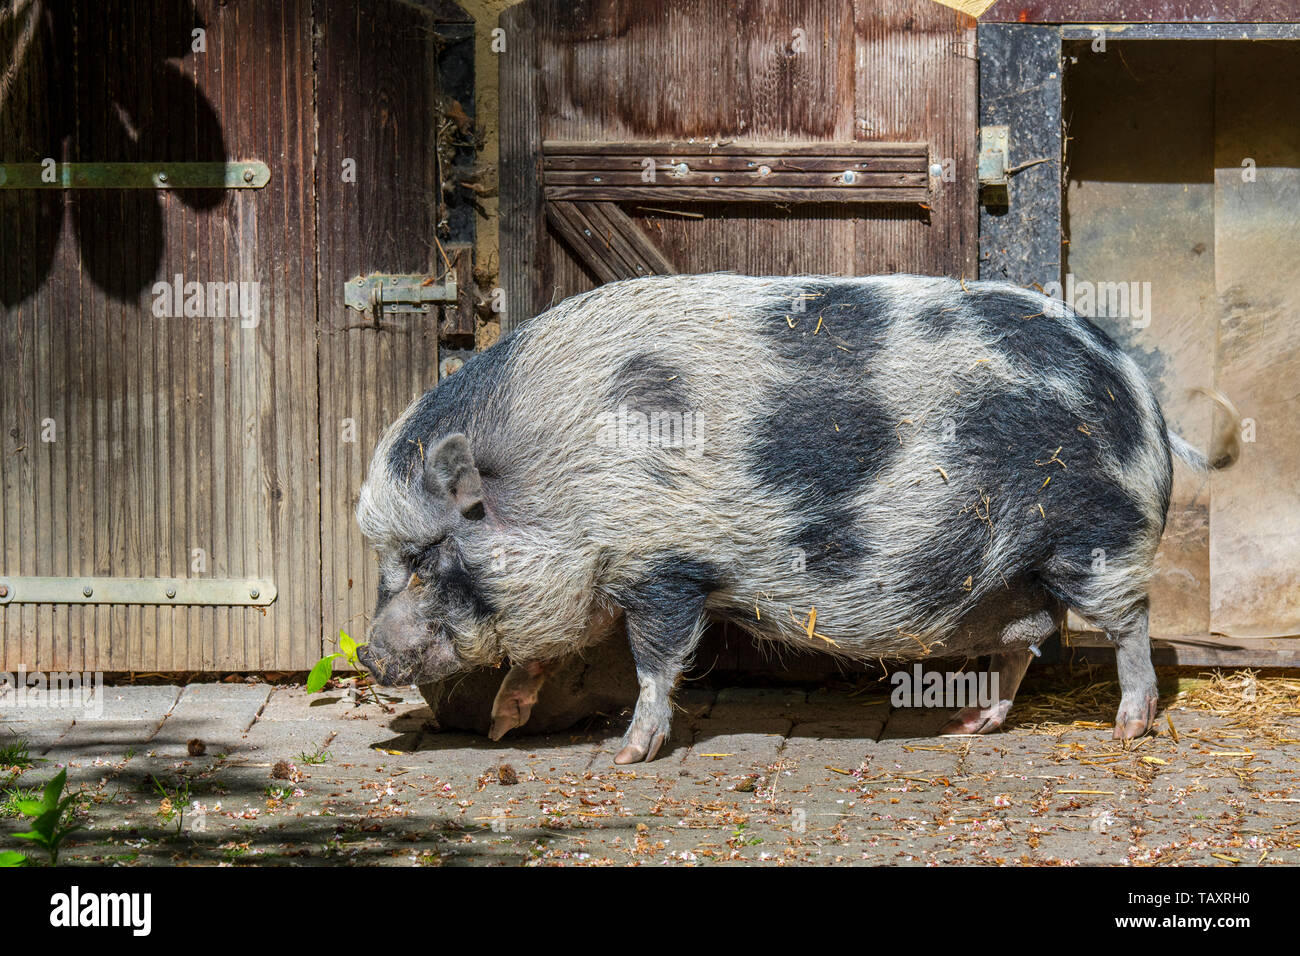 Miniature pig / Göttingen minipig / Göttinger / Goettingen minipig, breed of small domestic swine Stock Photo